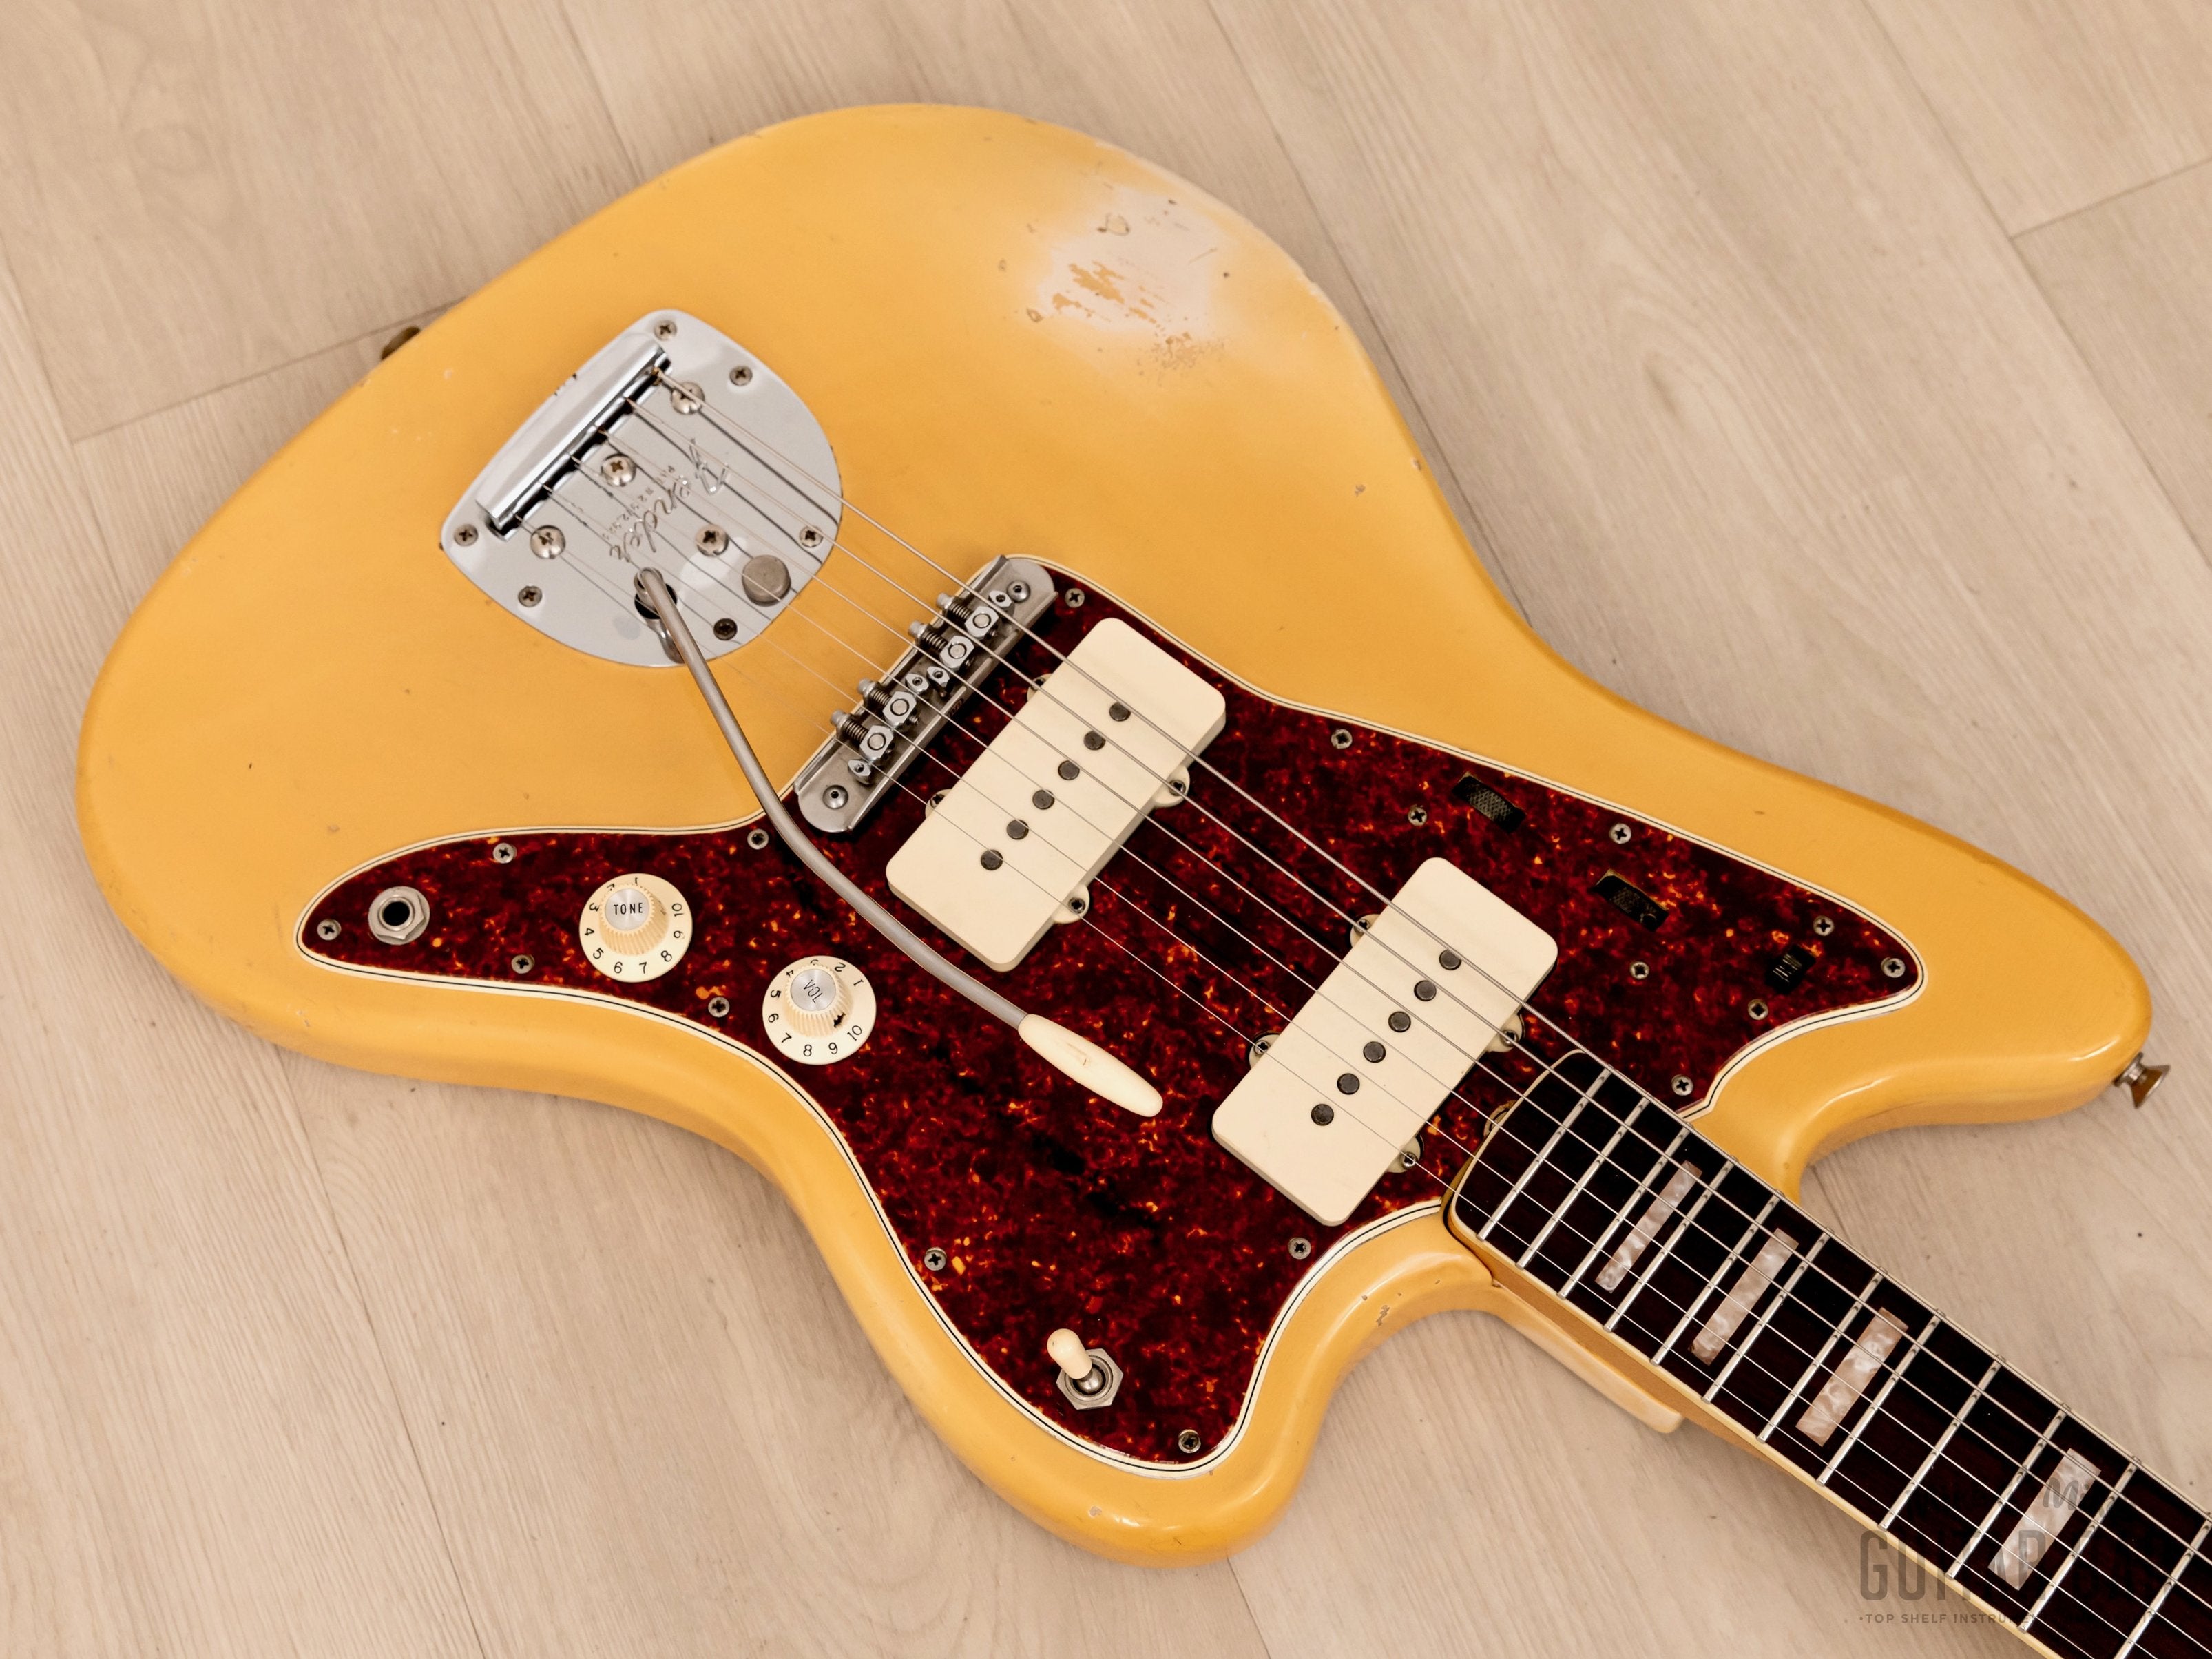 1967 Fender Jazzmaster Vintage Offset Guitar Blonde Ash Body w/ Case